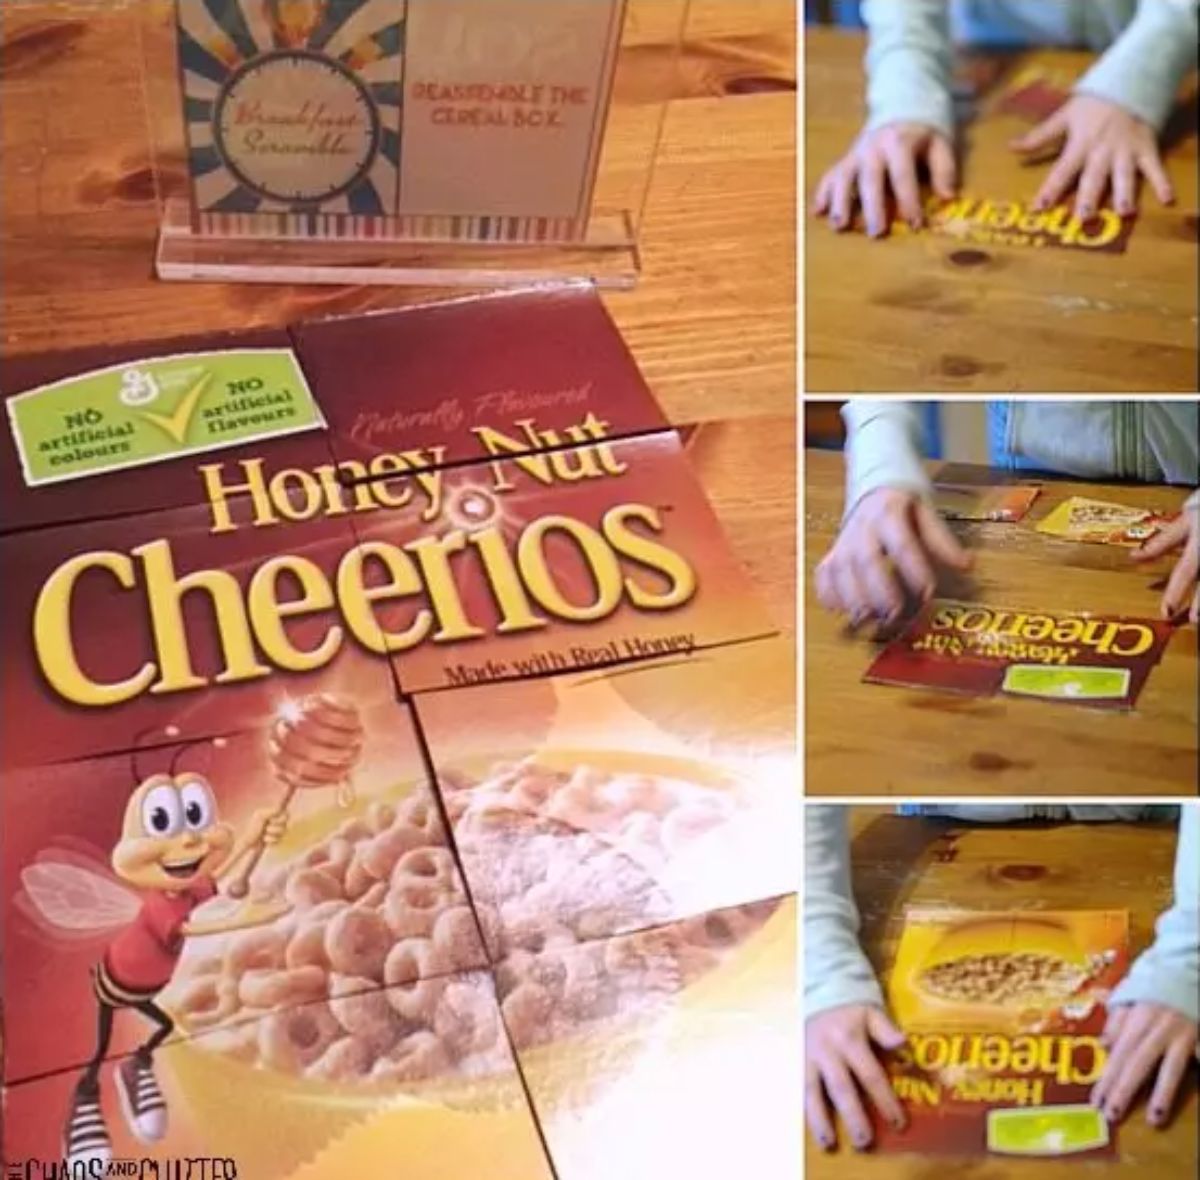 several photos show a child completing a jigsaw of a Honey Nut Cherrios box